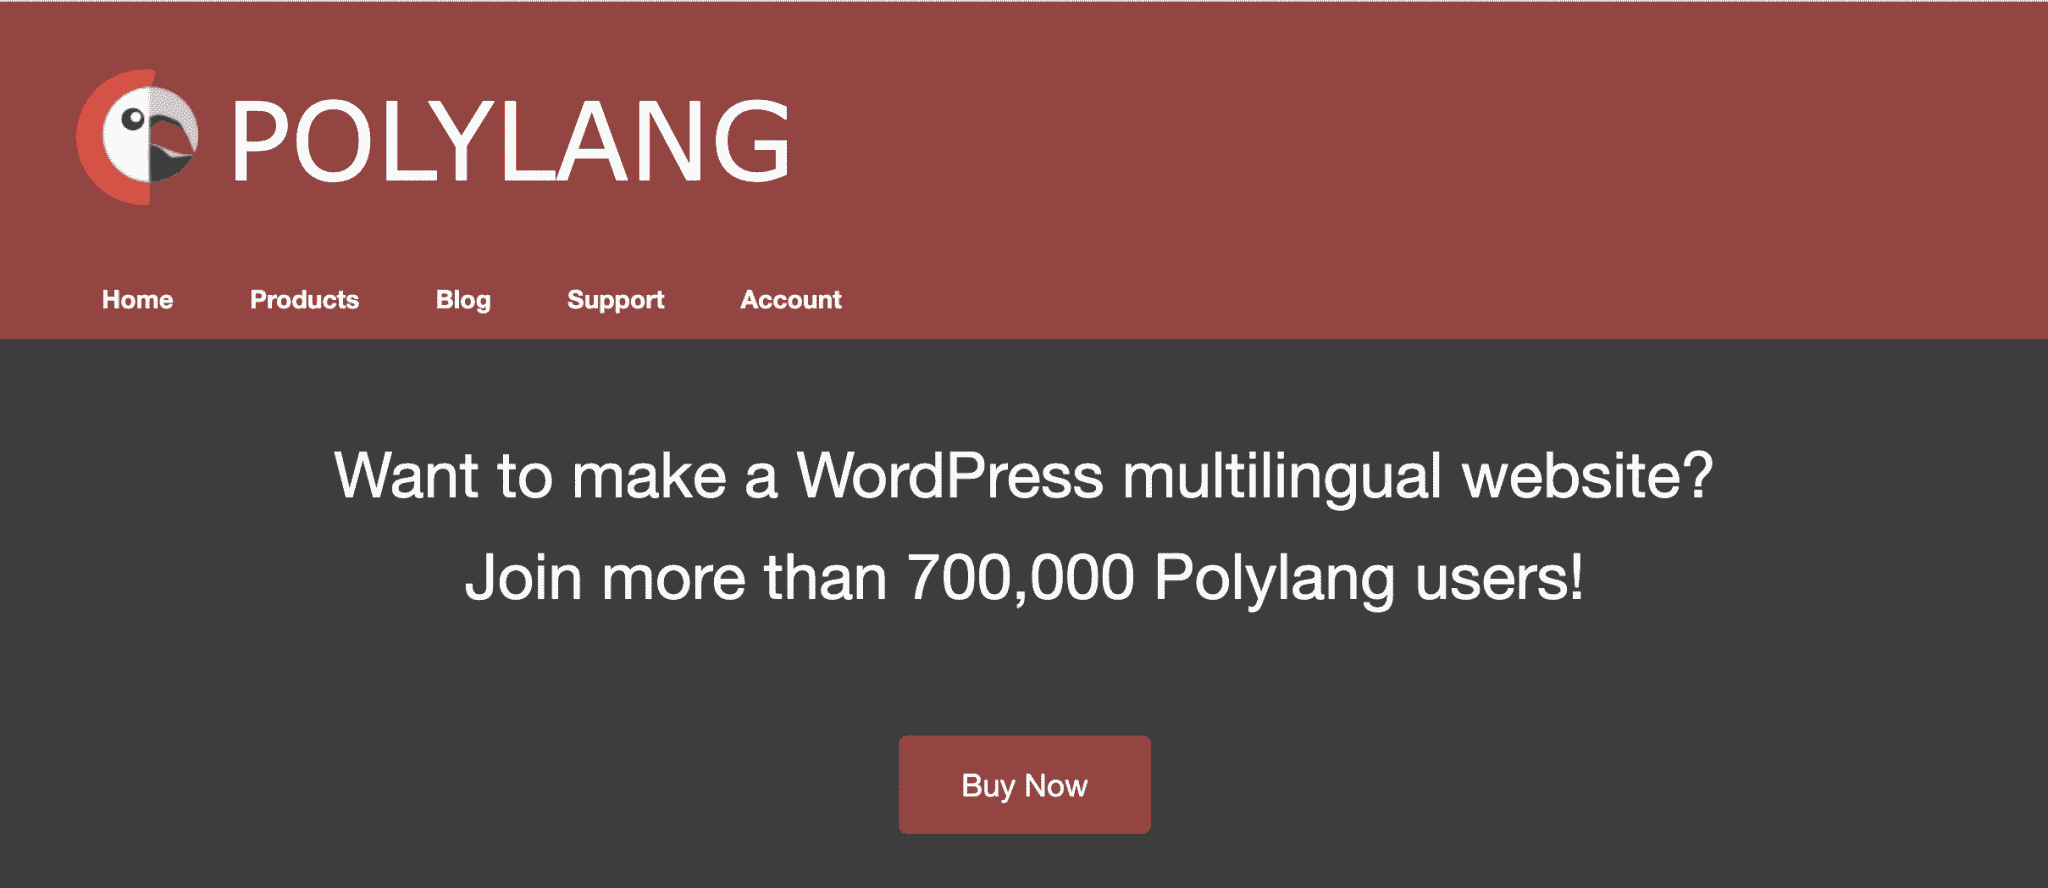 Polylang permet de rendre WordPress multilingue.